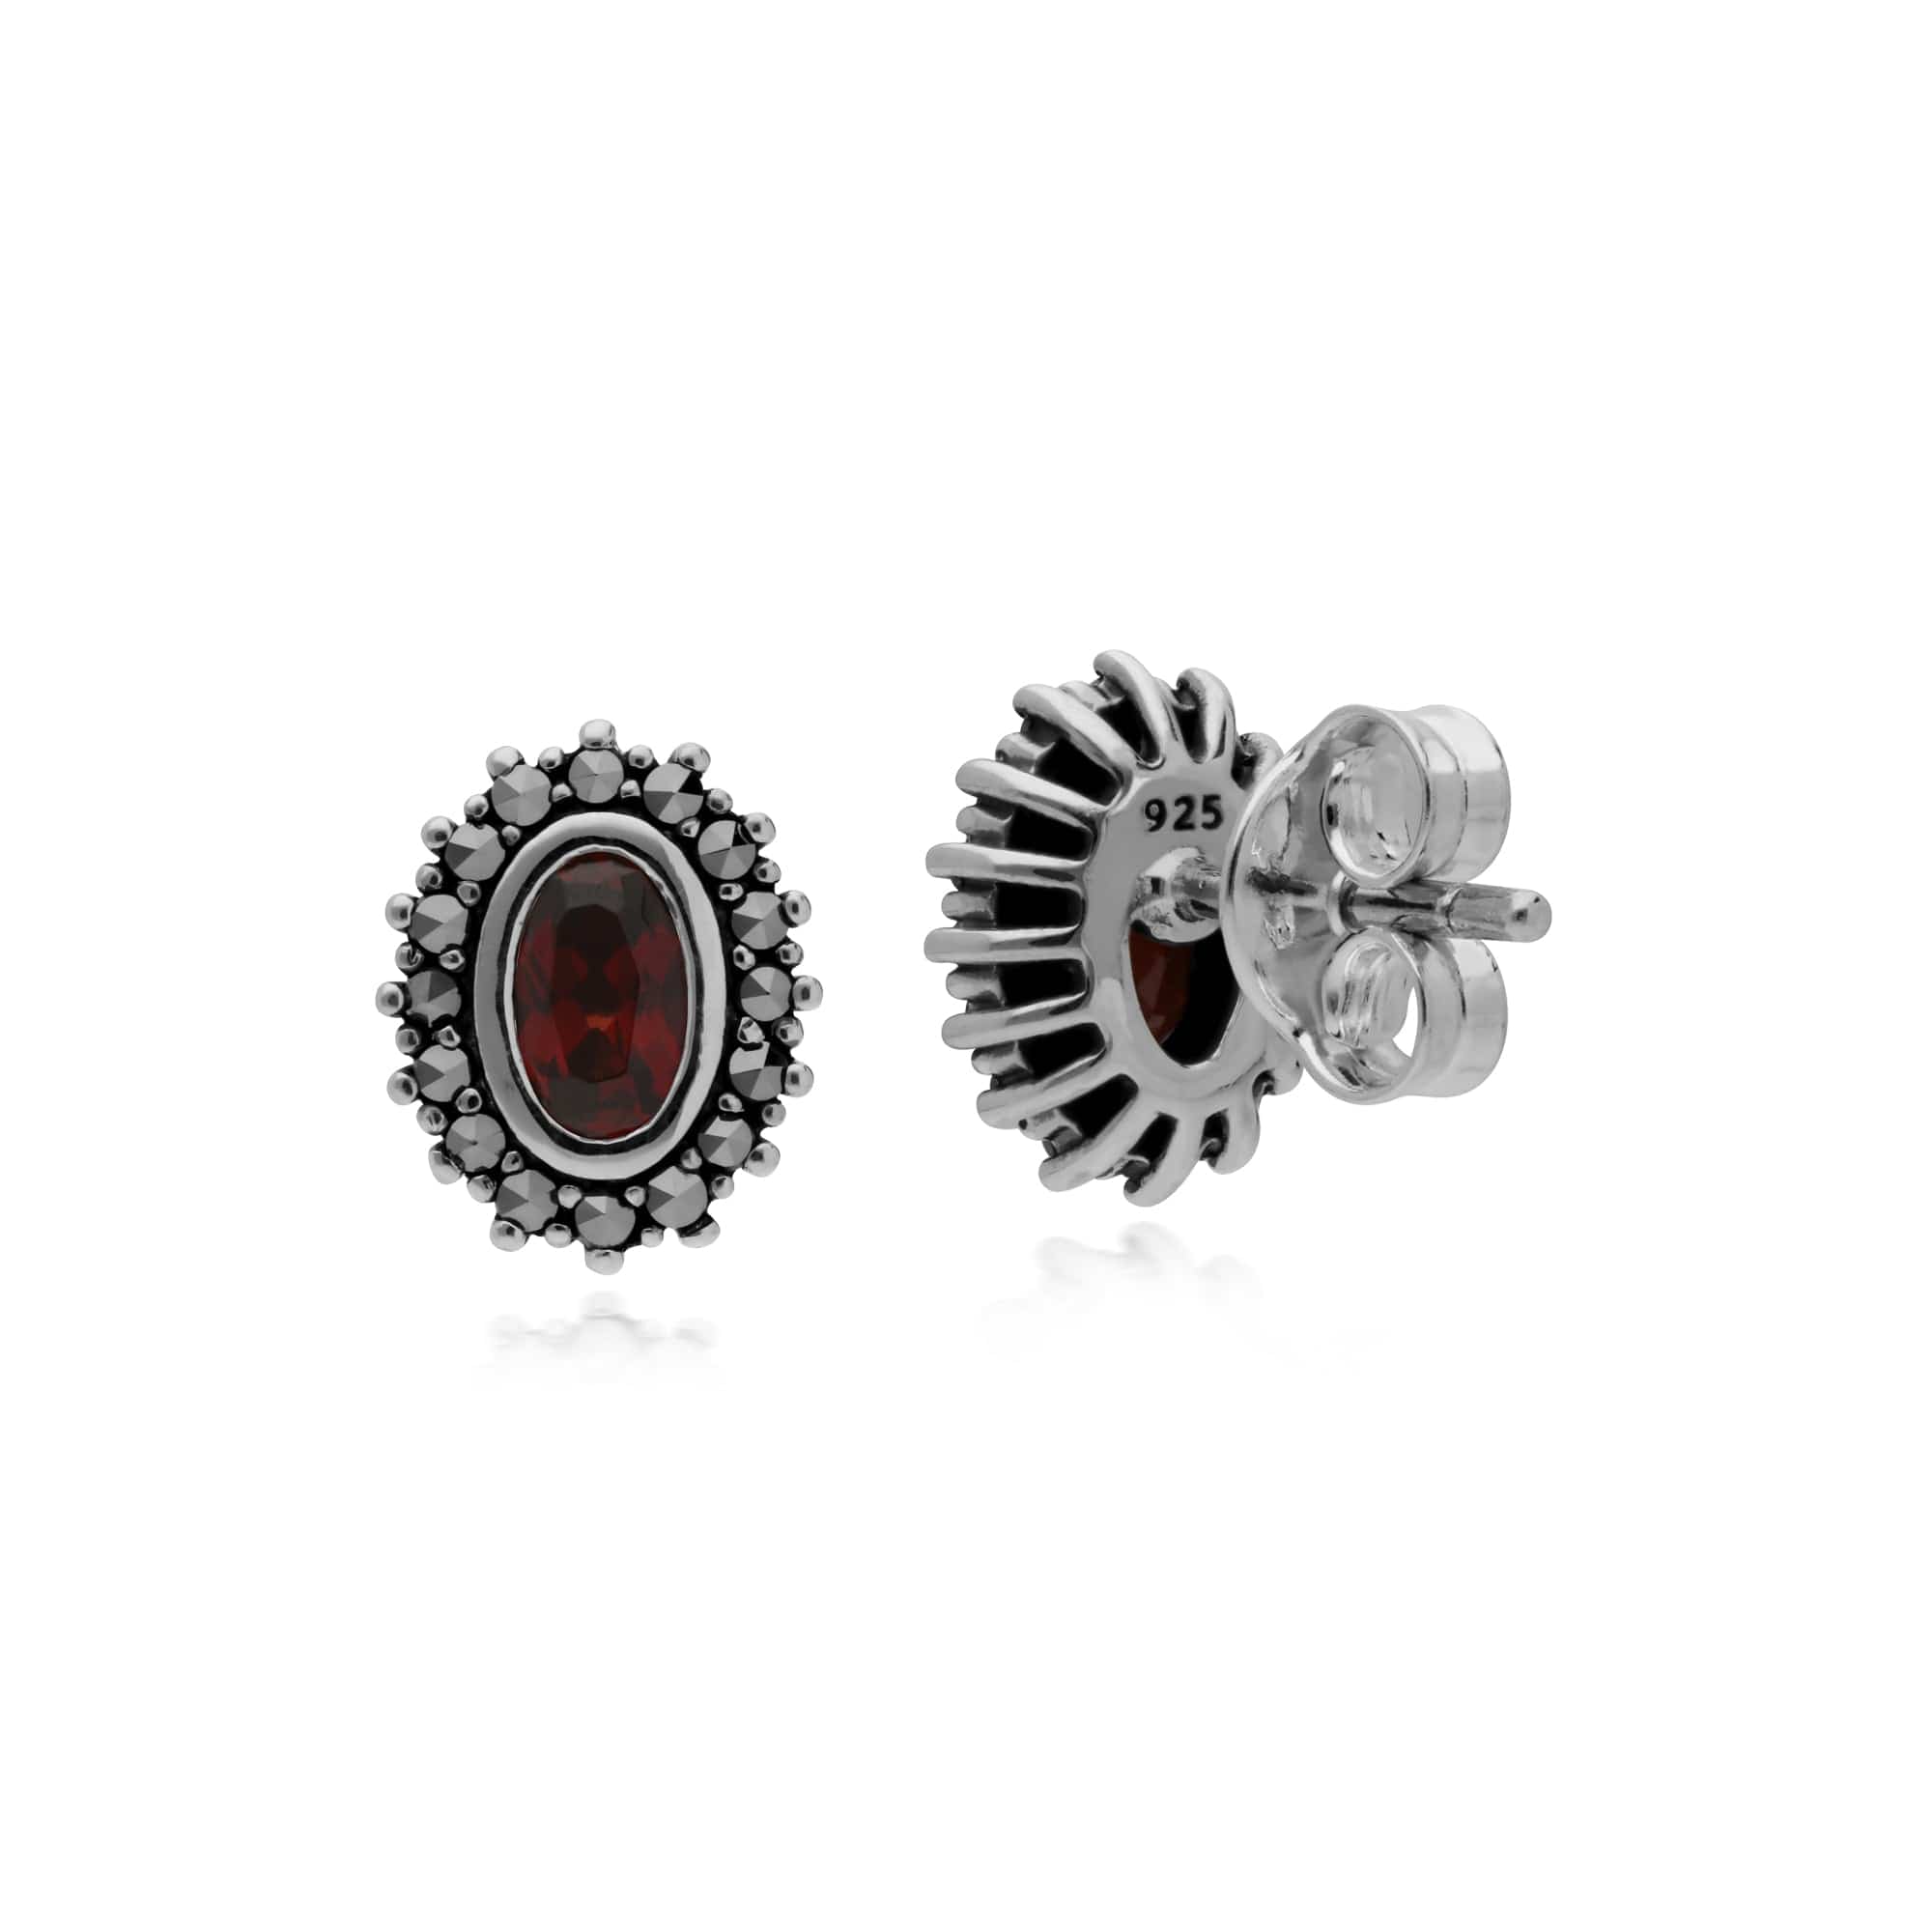 214E860903925 Sterling Silver Mozambique Garnet & Marcasite January Art Nouveau Stud Earrings 2